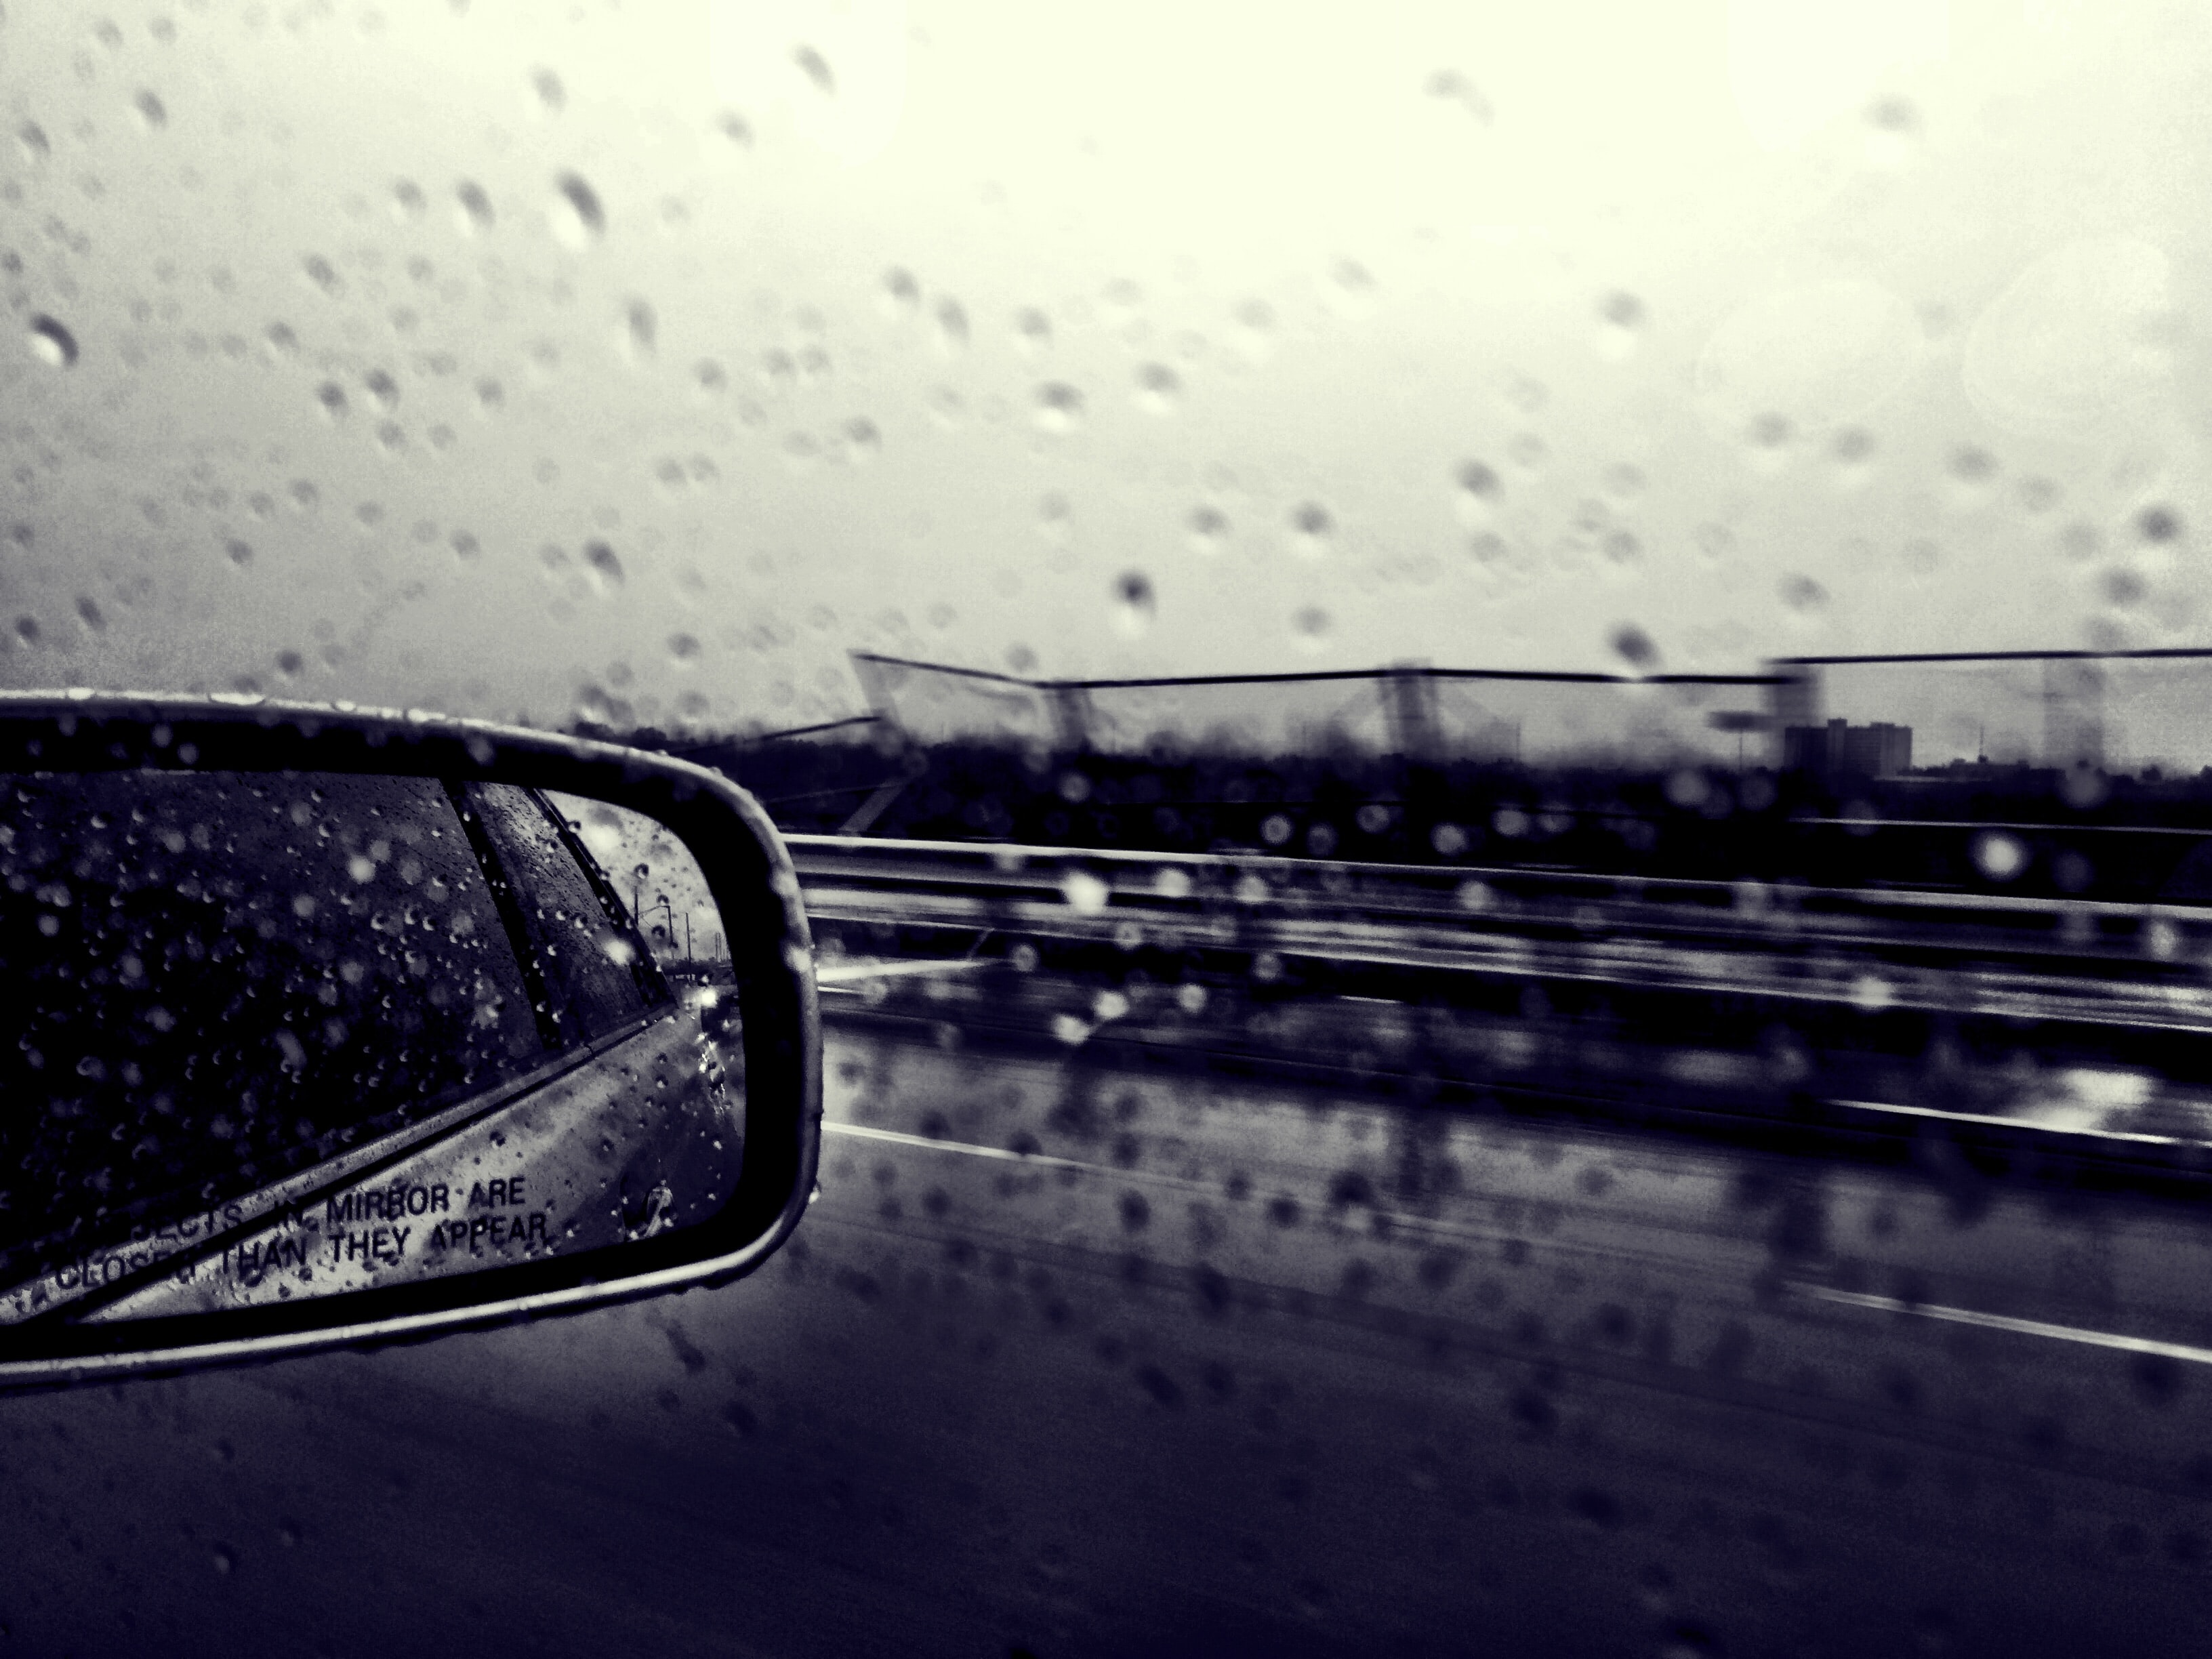 Rear view mirror; image by Elly Filho, via Unsplash.com.